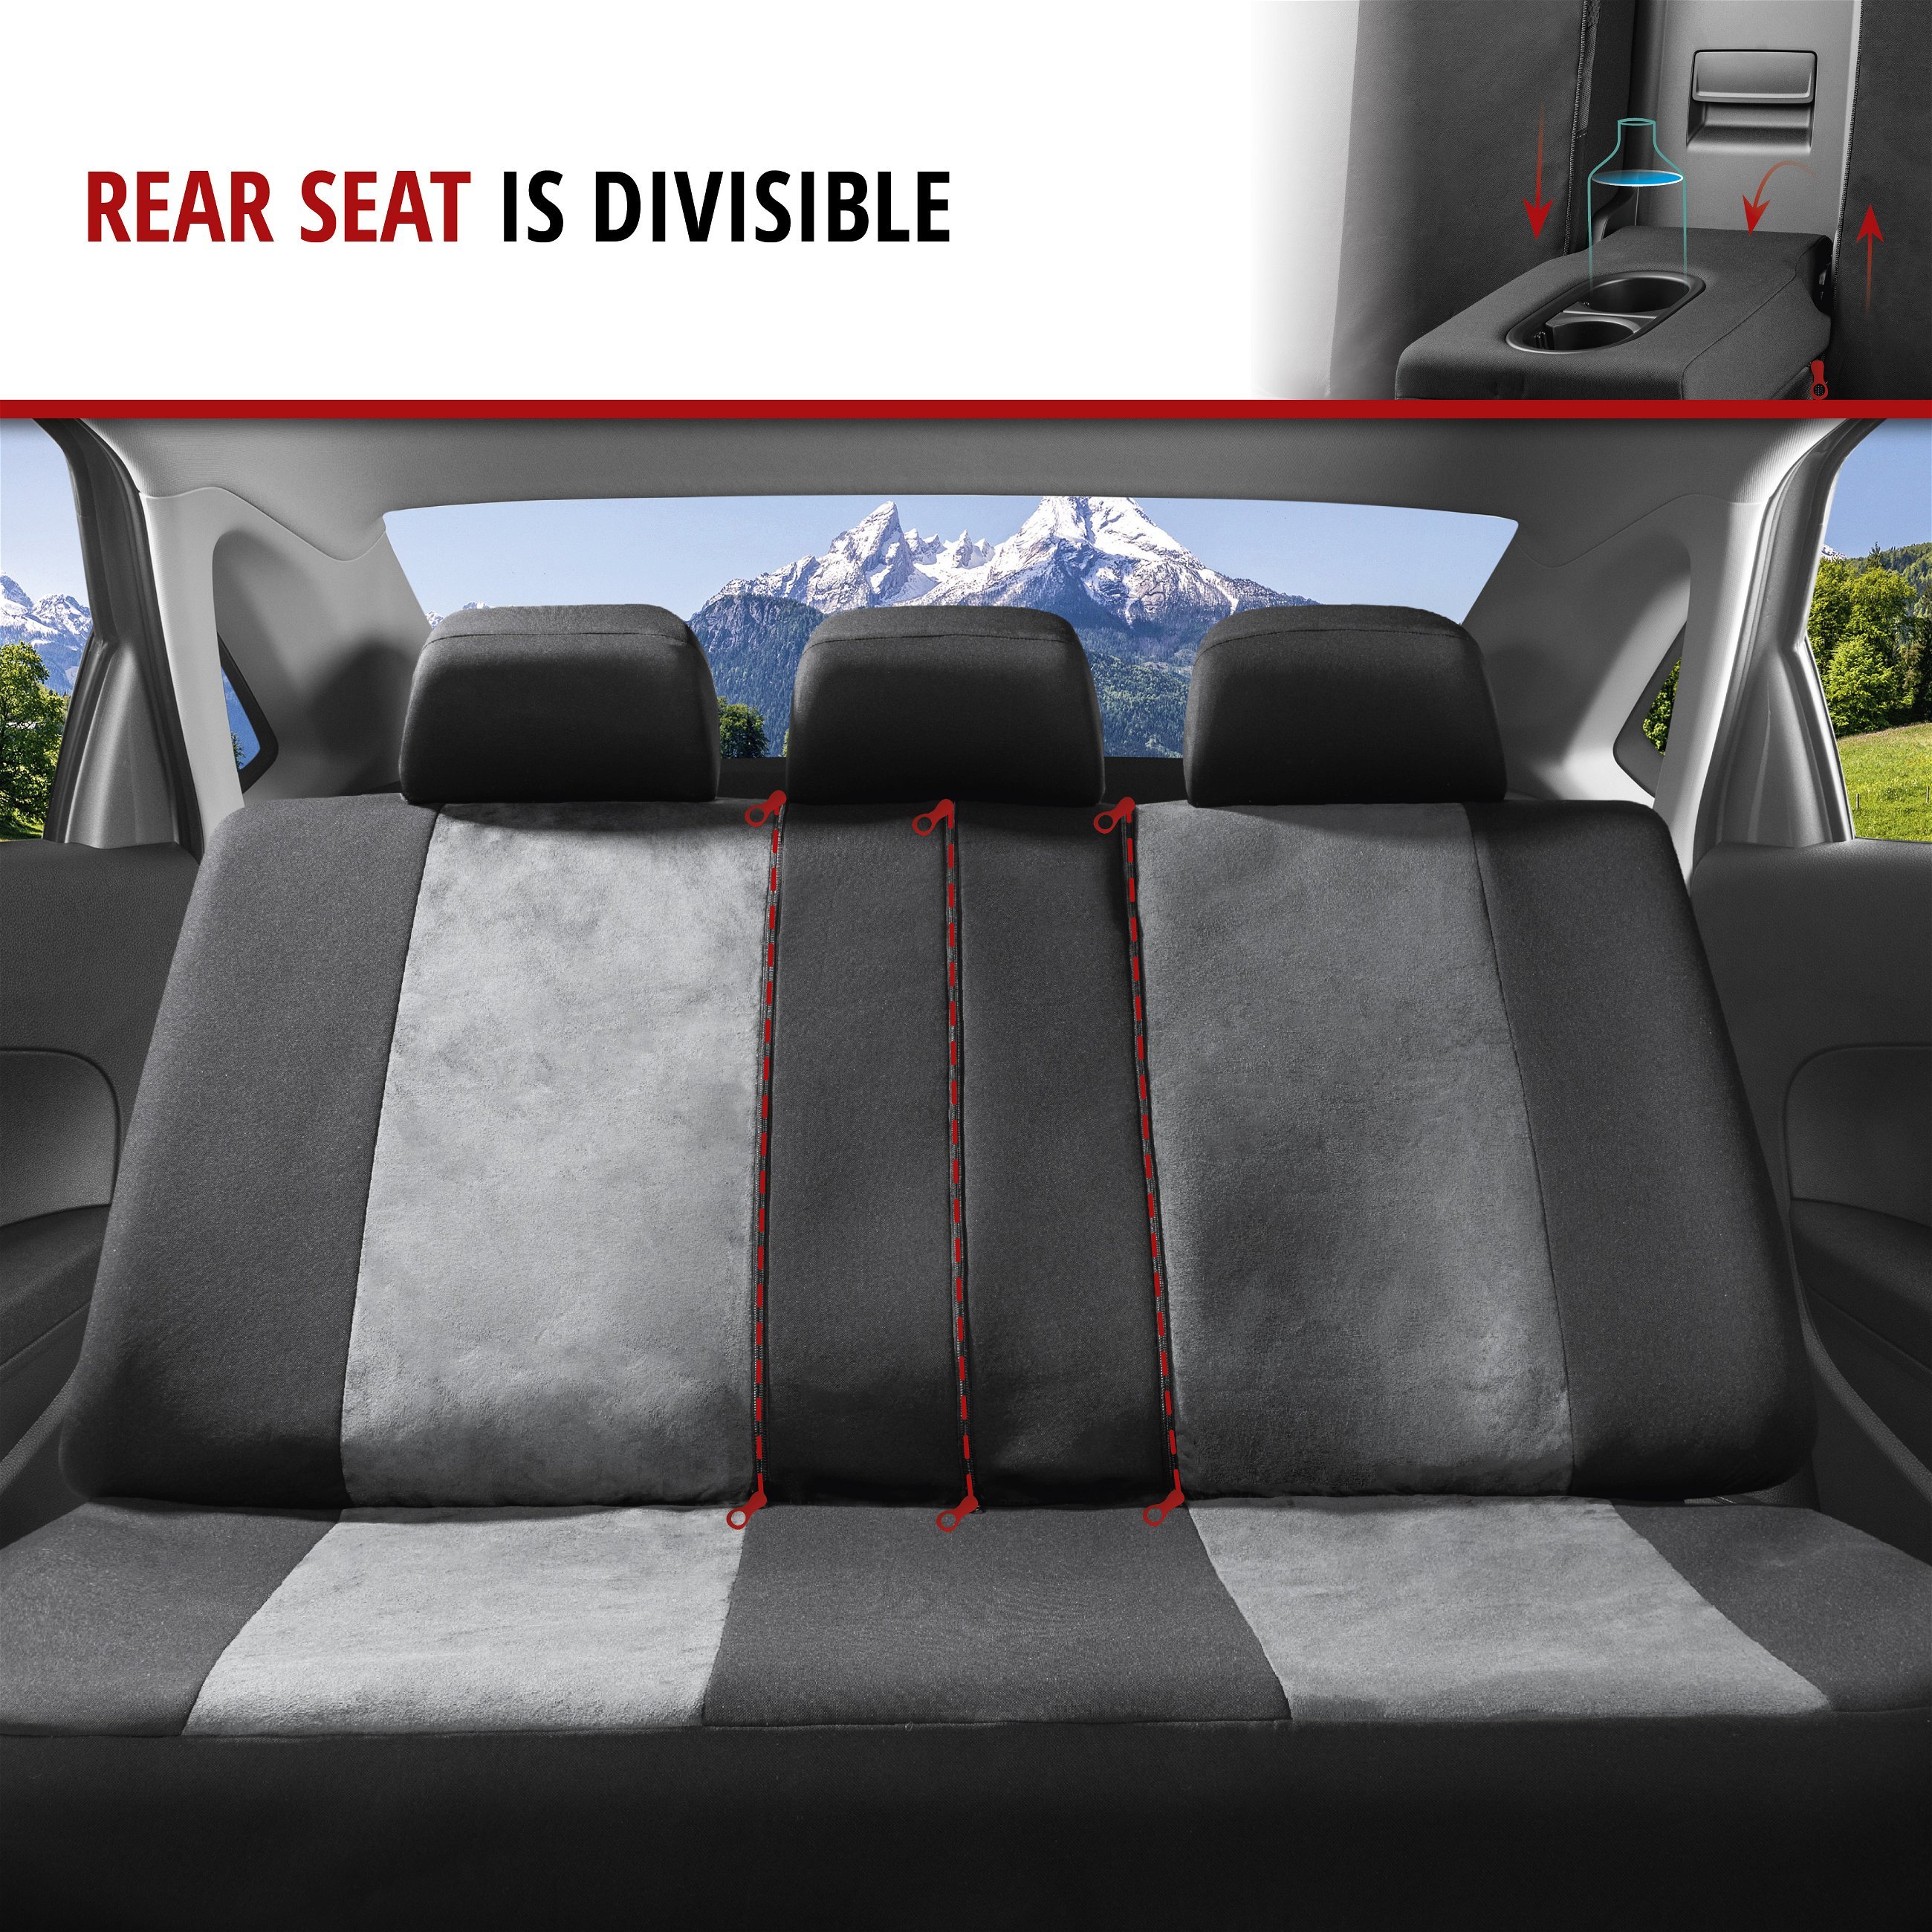 ZIPP IT Premium Car seat covers Ellington complete set with zip-system black/grey